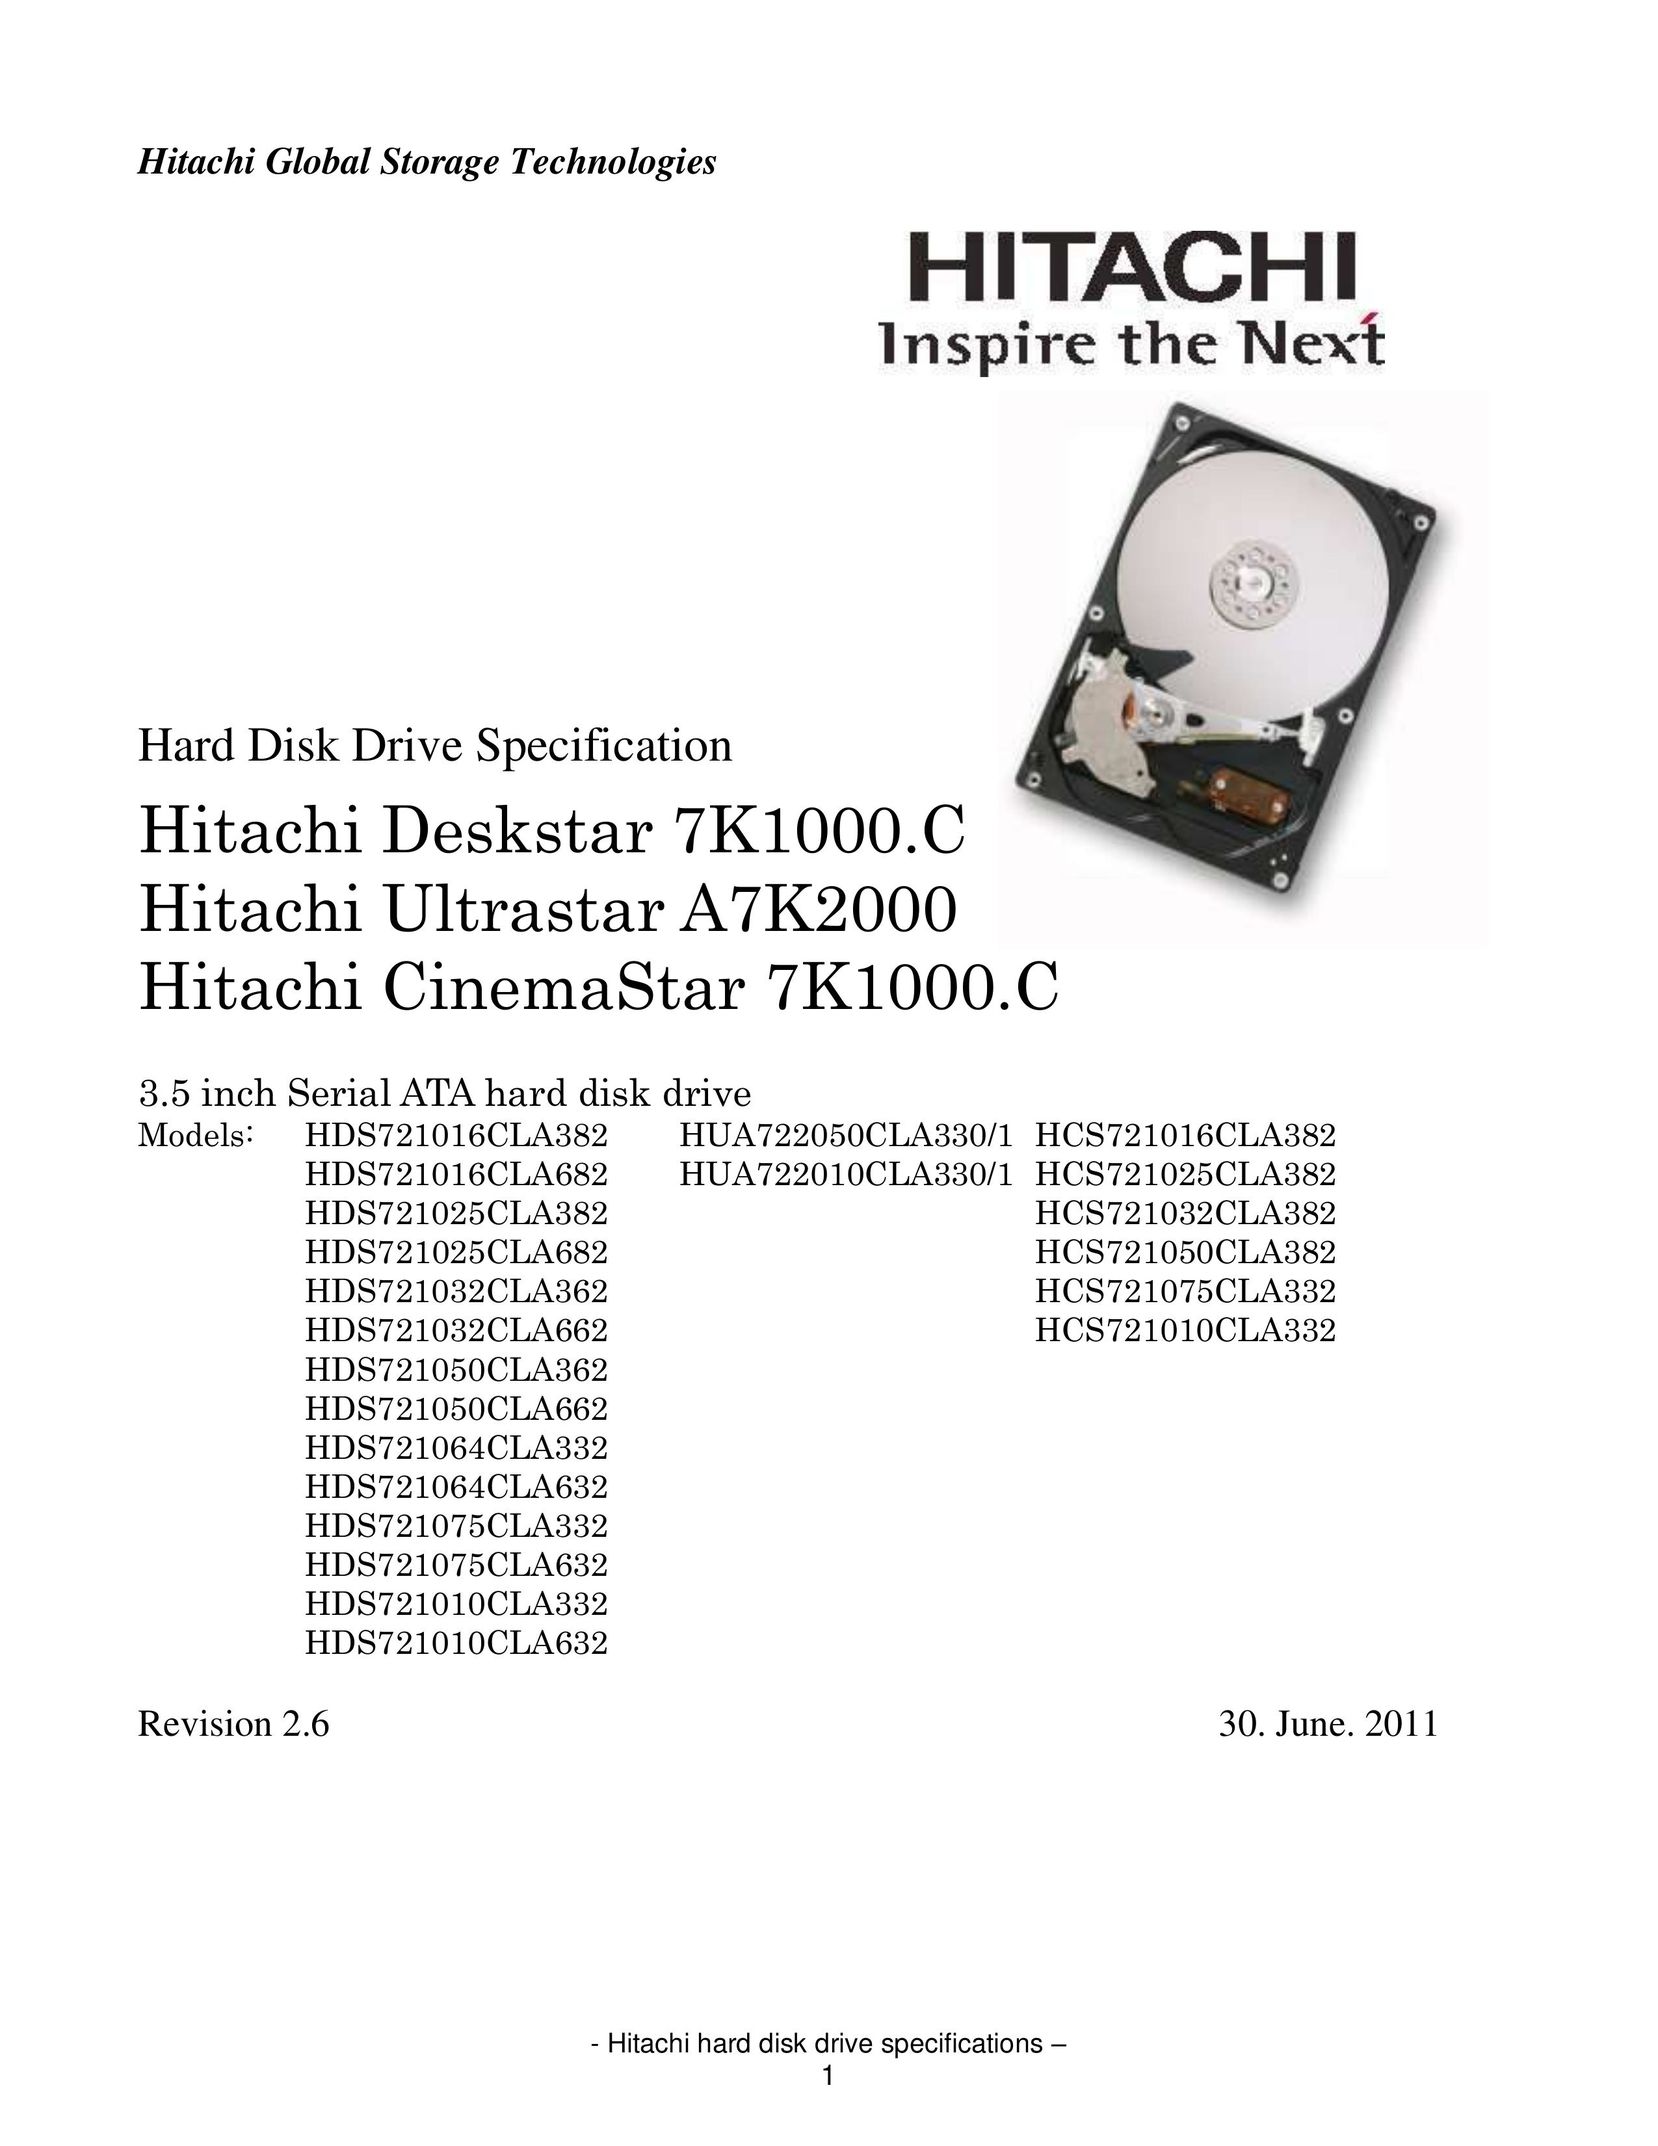 Hitachi HCS721032CLA382 Computer Drive User Manual